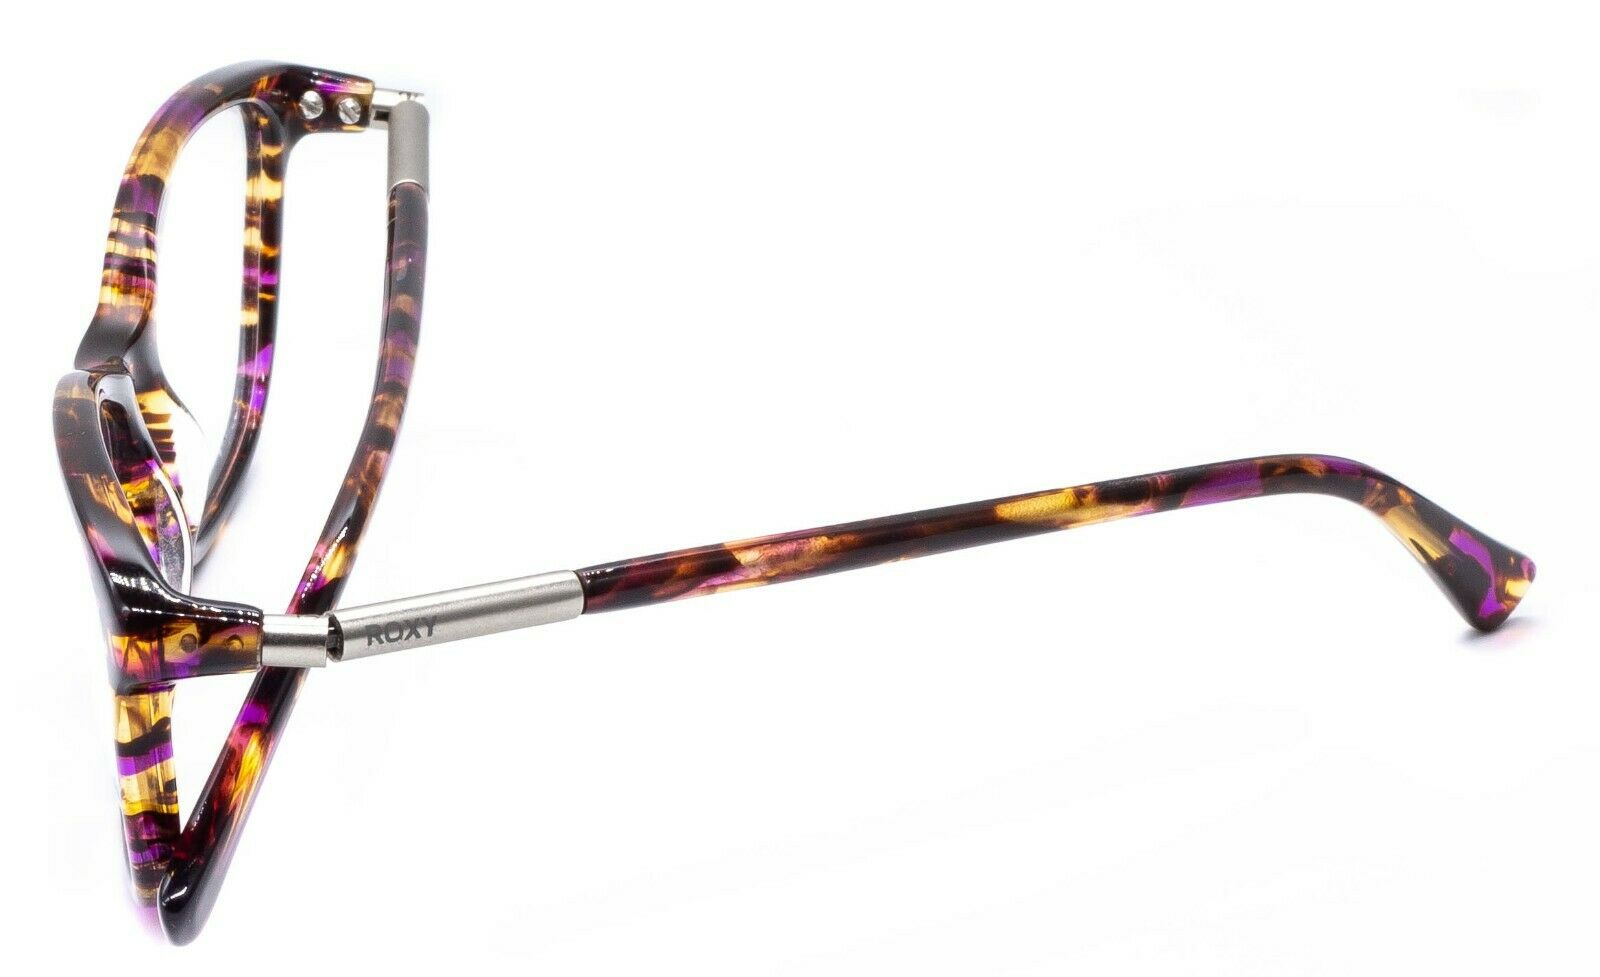 ROXY ERJEG00004/PUR Sarah 53mm Eyewear FRAMES Glasses RX Optical Eyeglasses New